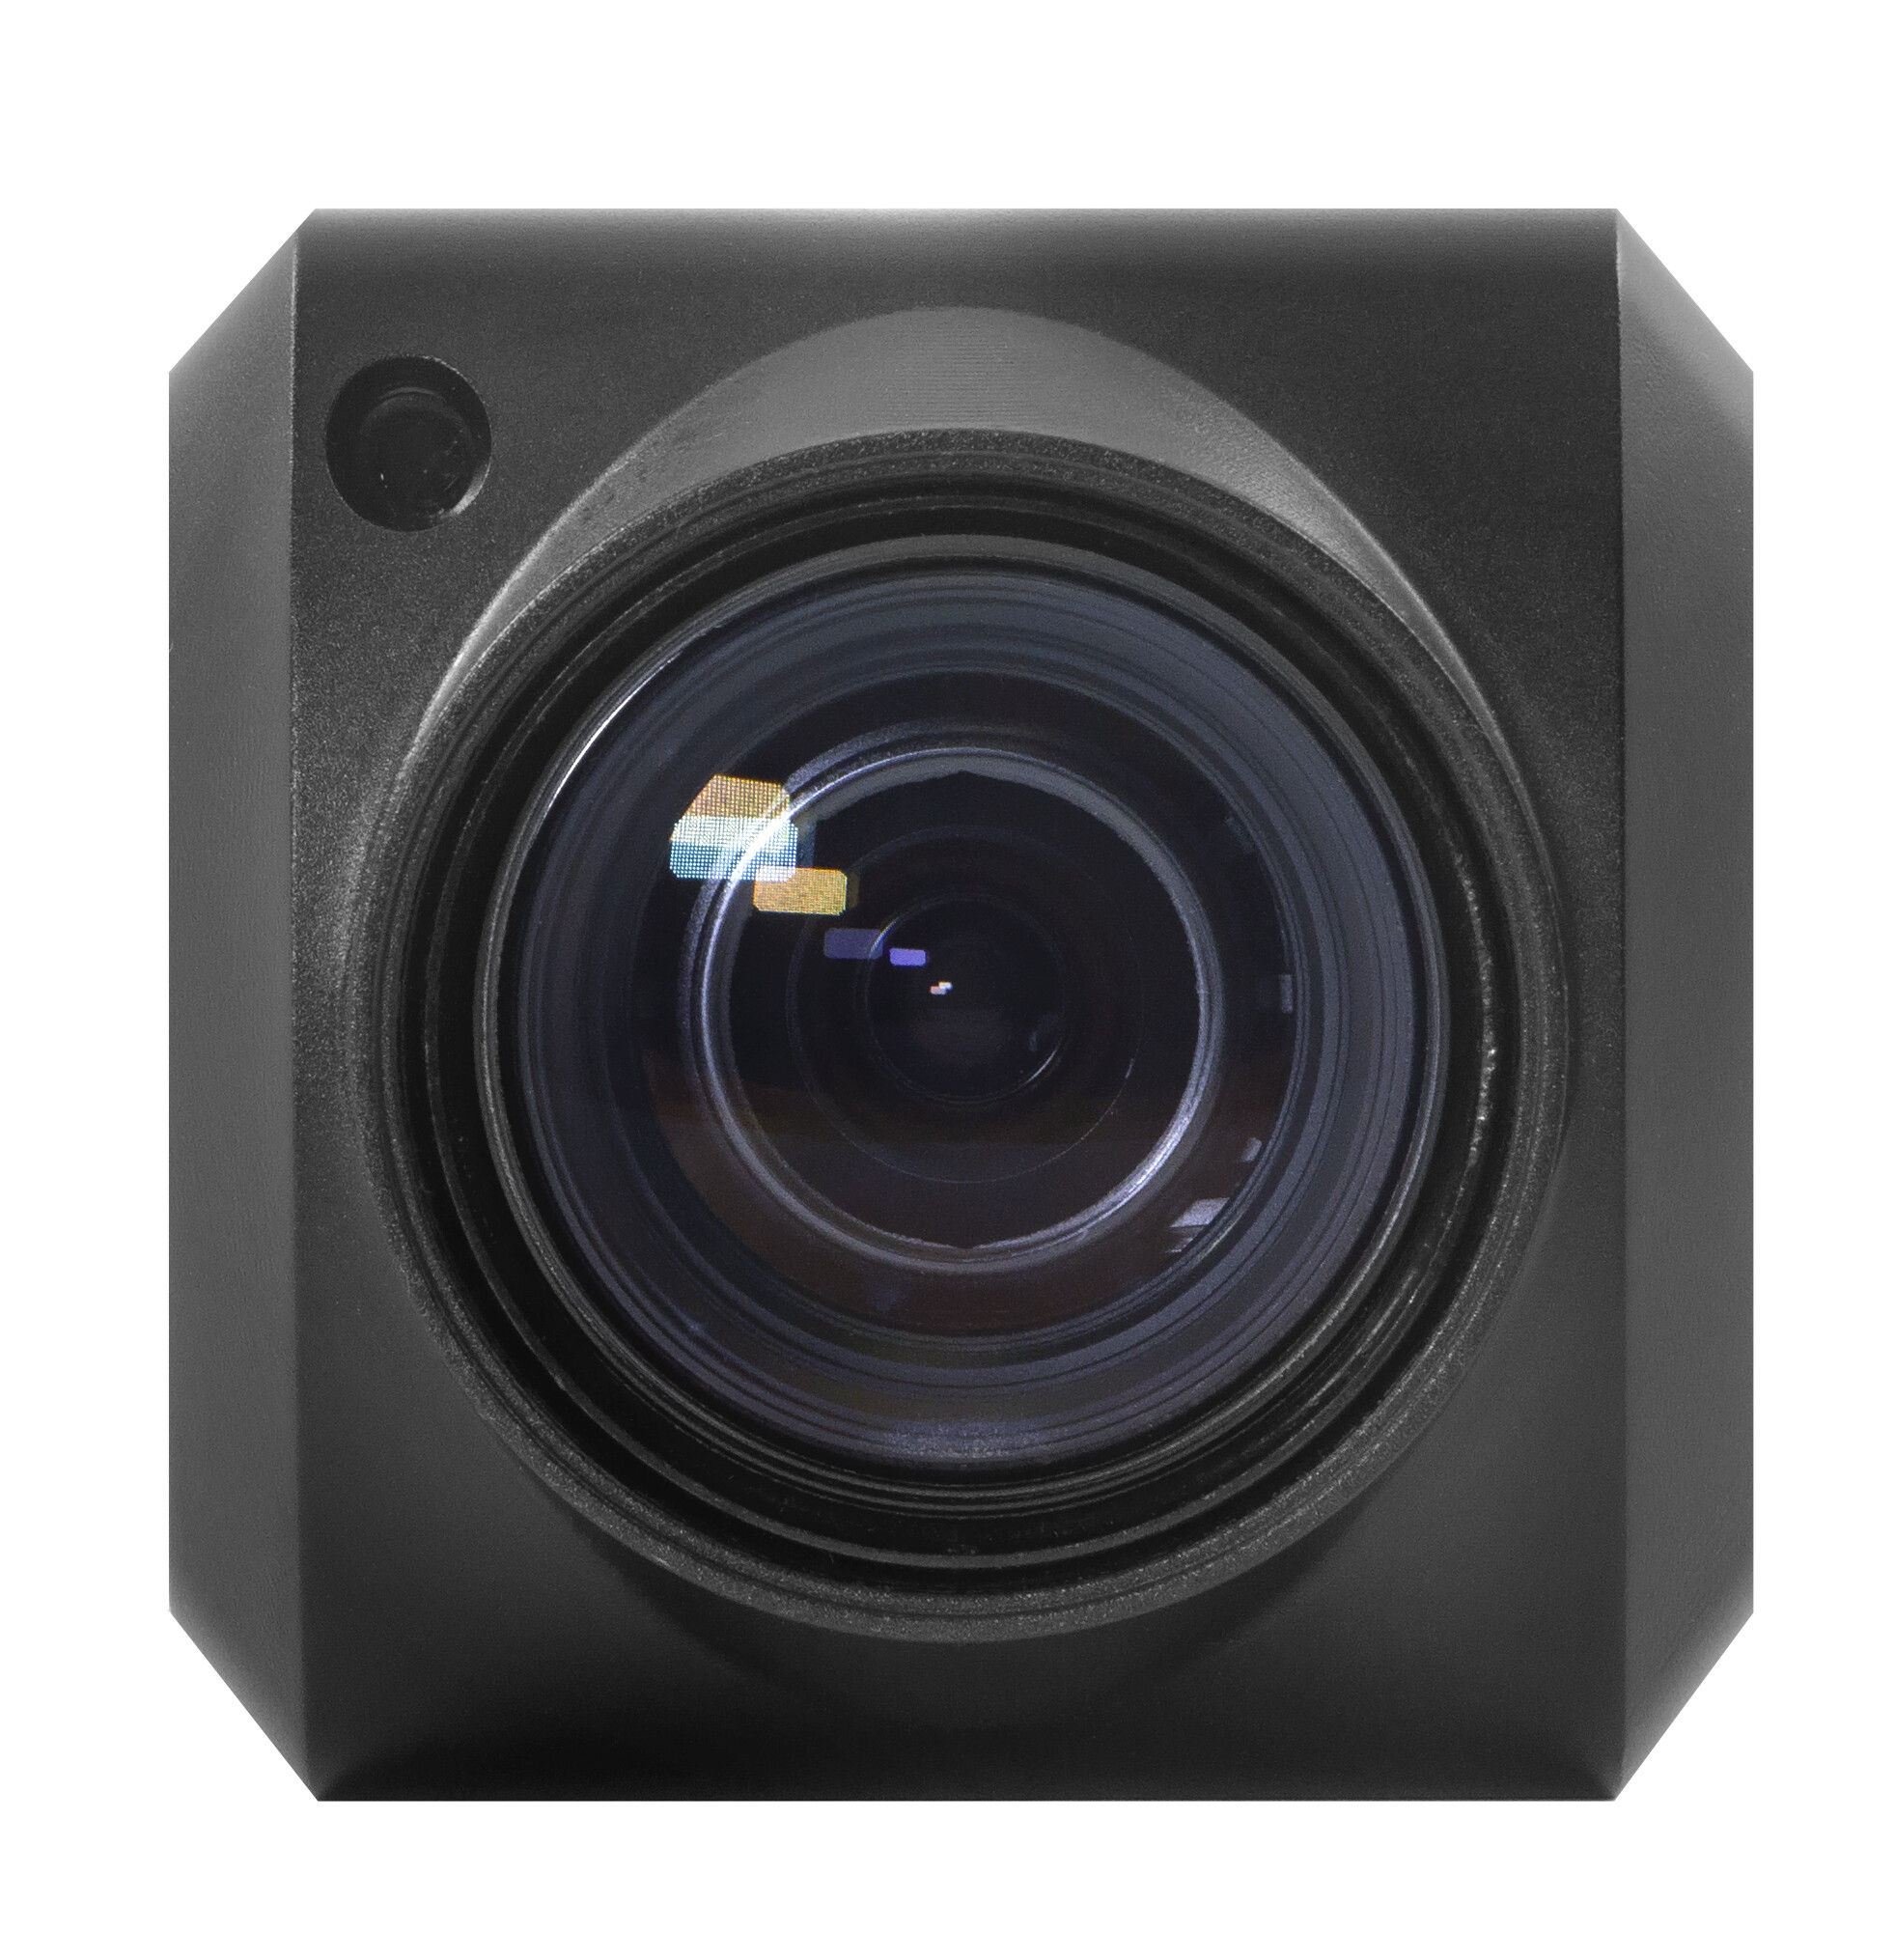 Marshall-Electronics-CV355-10X-Full-HD-Camera